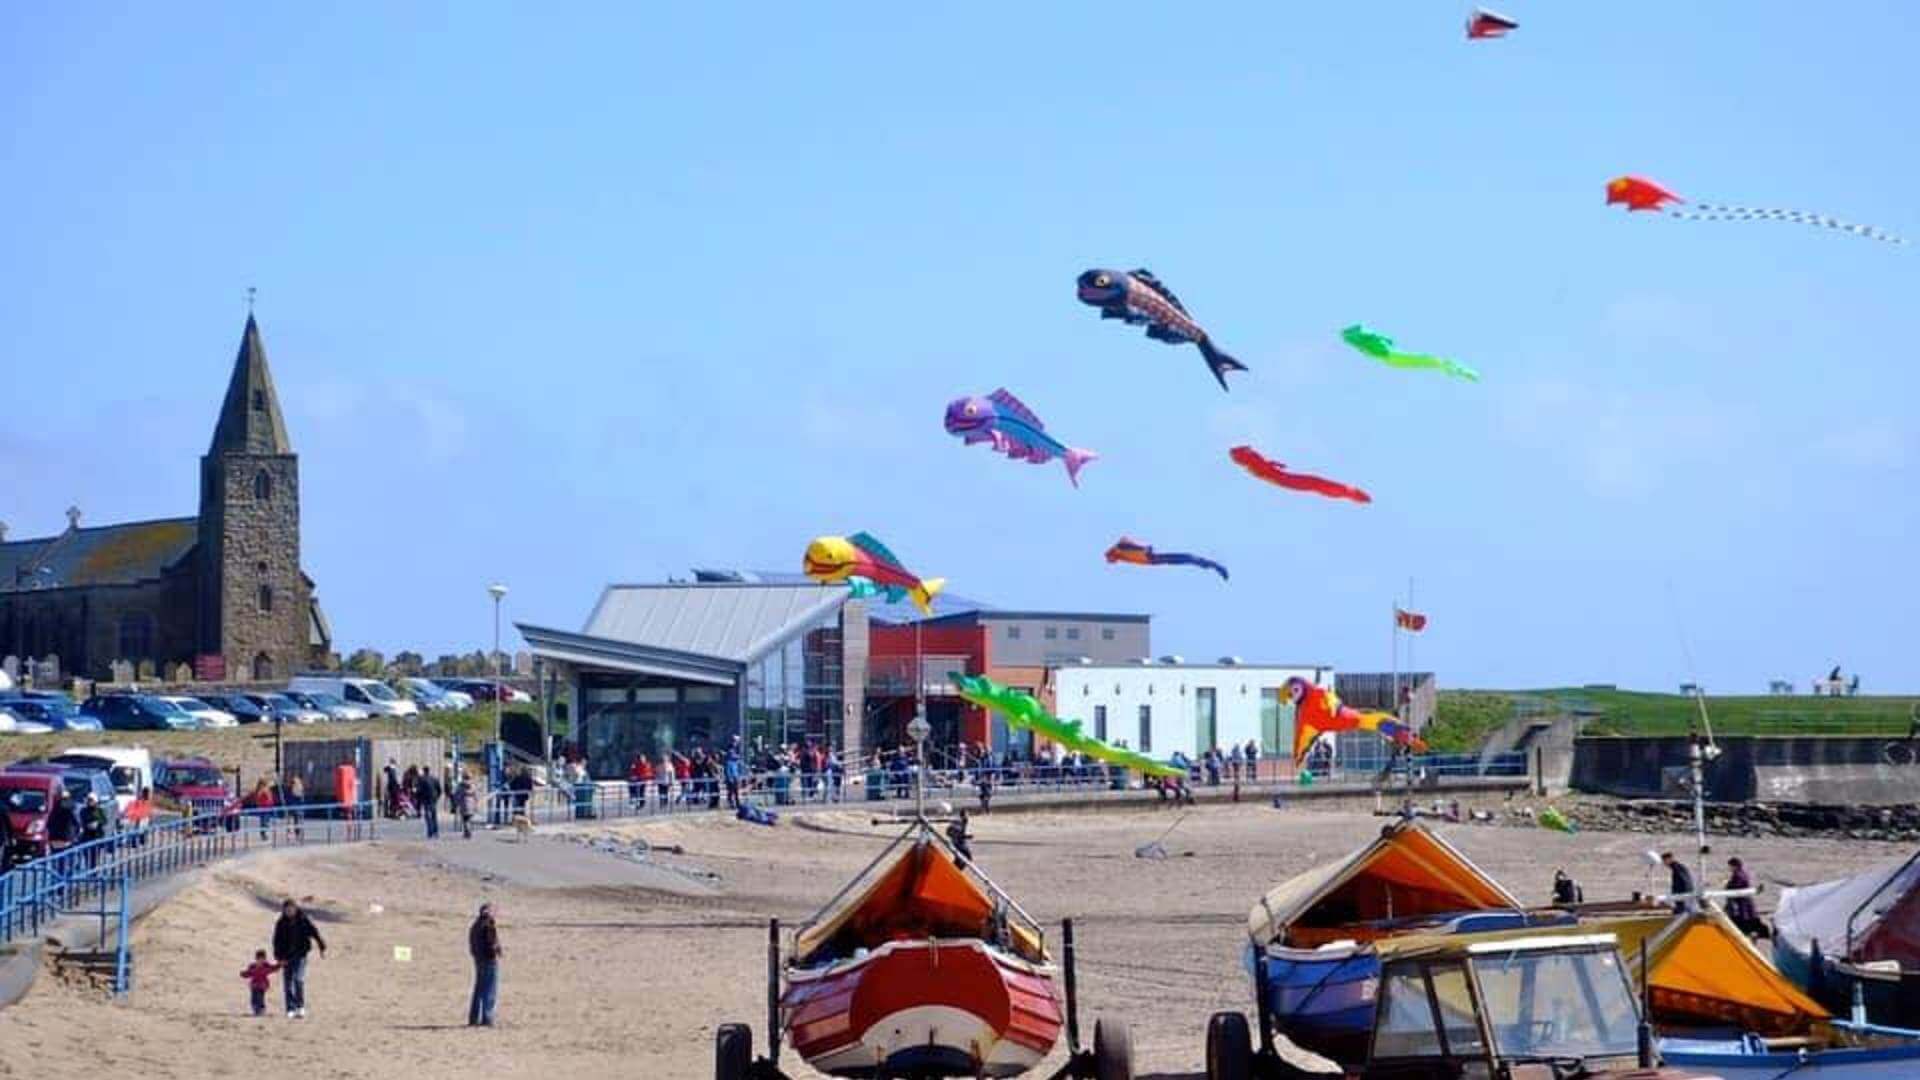 Kite festival at Newbiggin